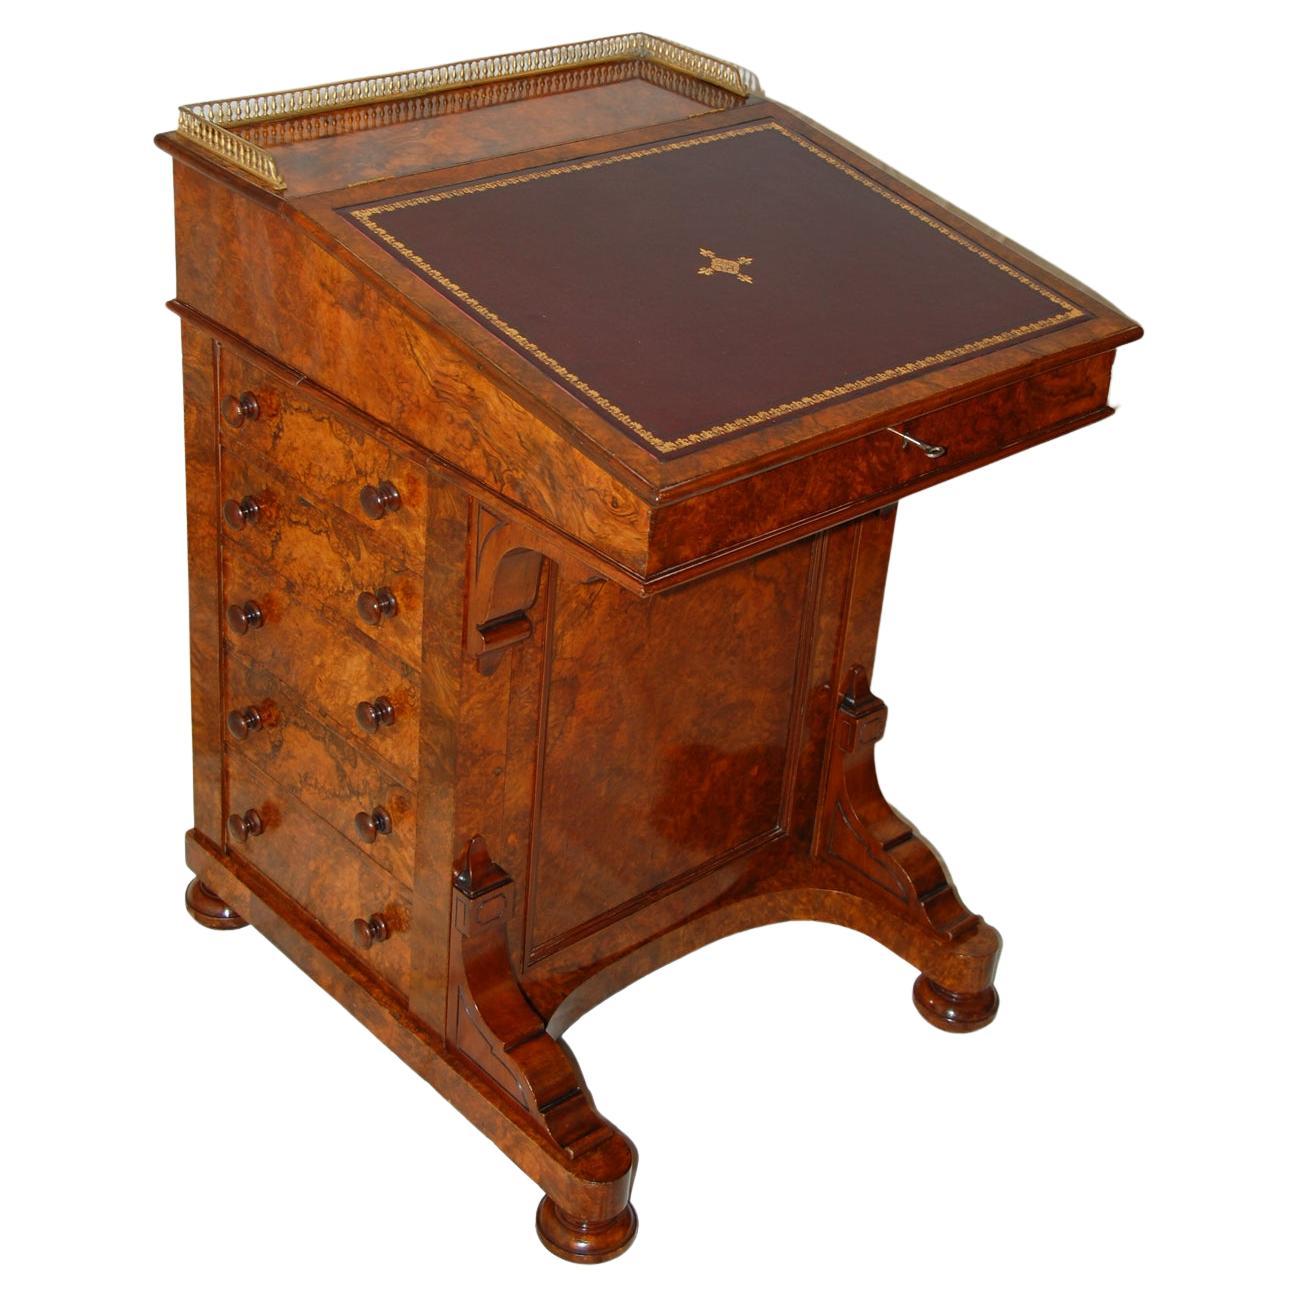 English Mid-19th Century Burl Walnut Davenport Desk with Leathered Writing Slope